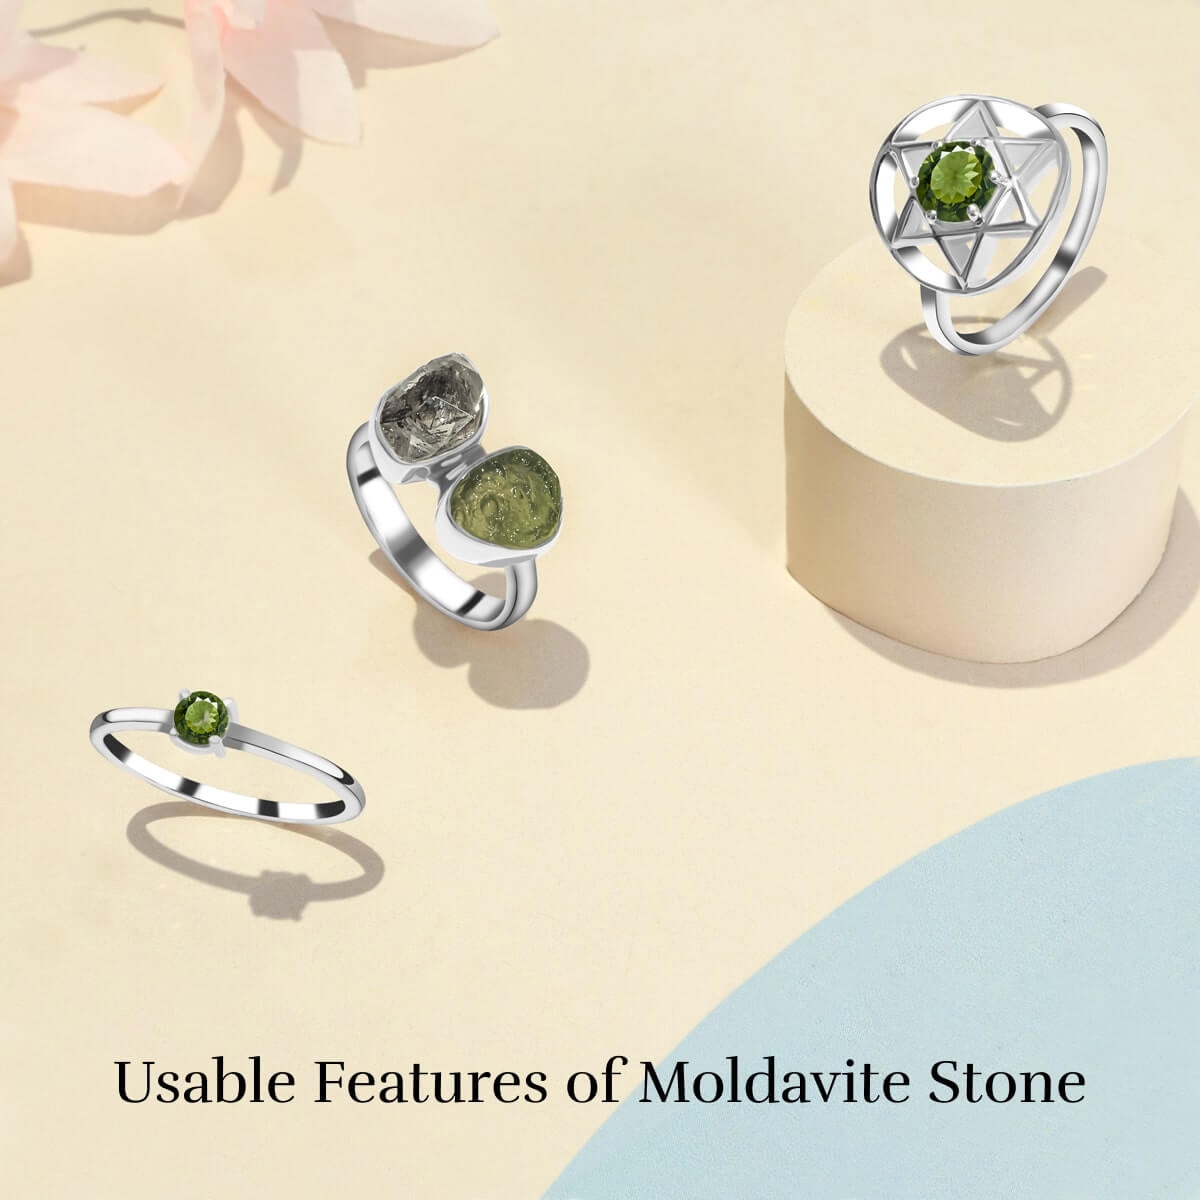 Moldavite uses